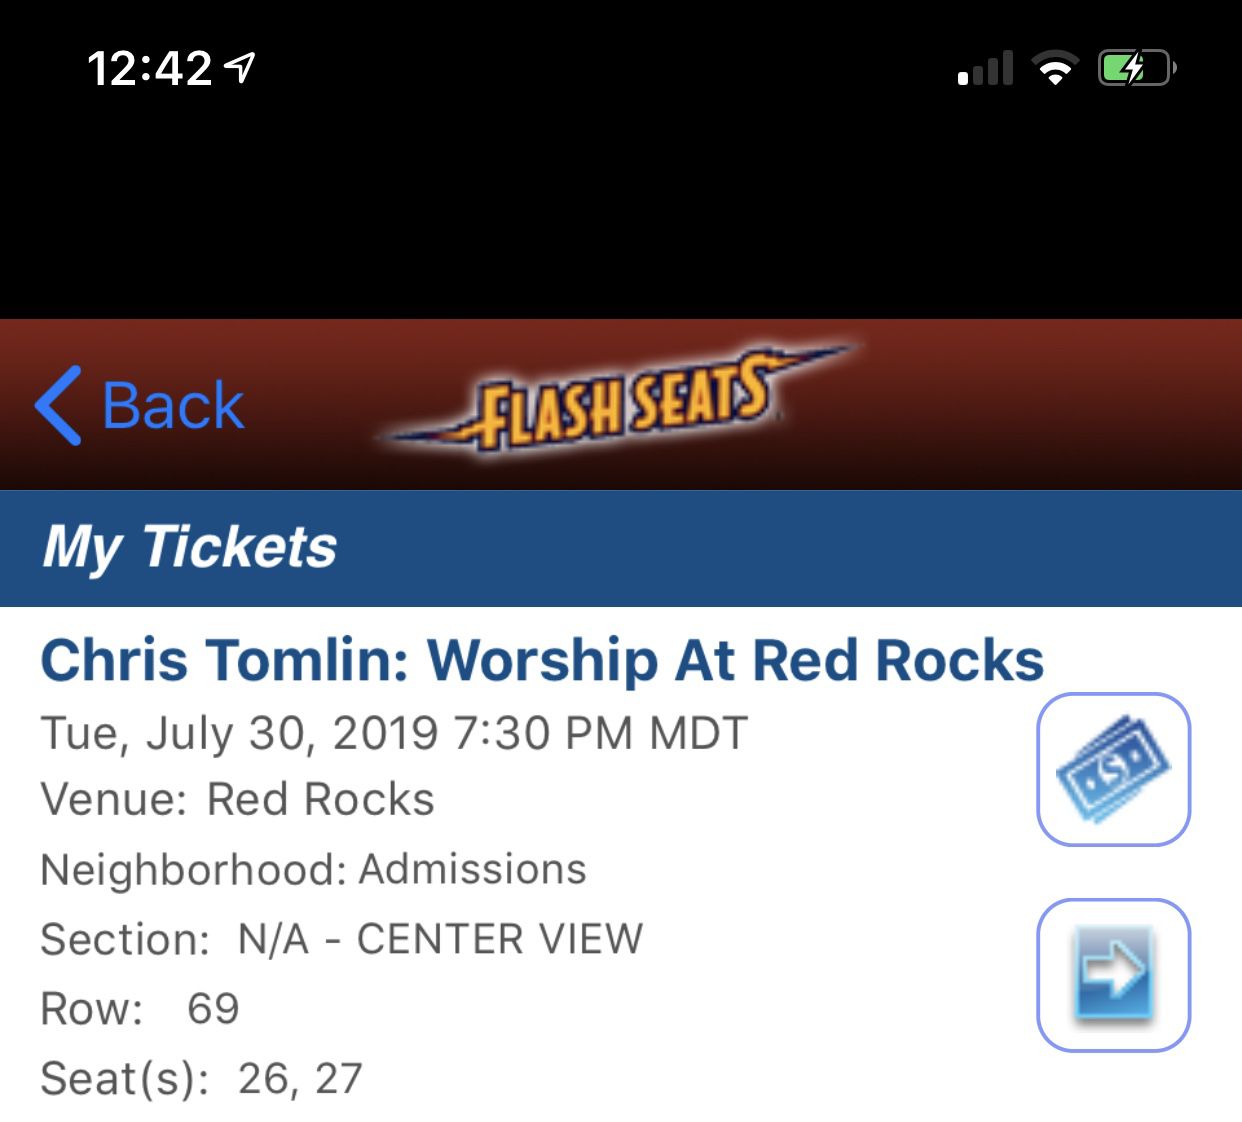 Chris Tomlin concert tickets